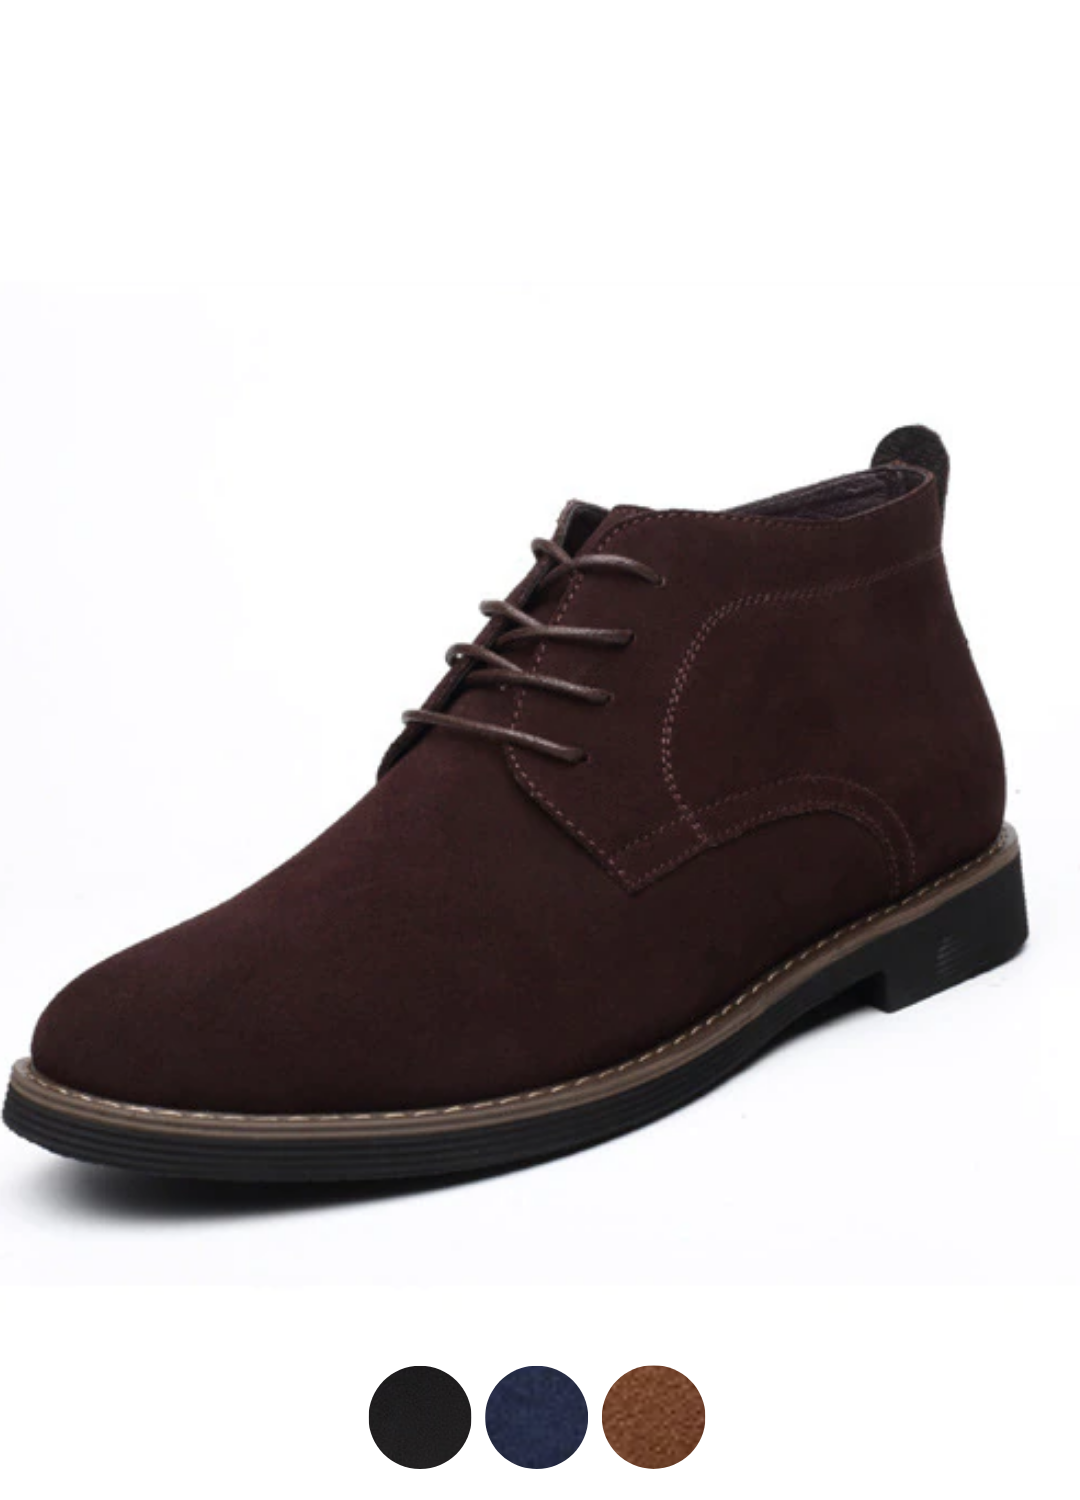 Frank Men's Chukka Boots | Ultrasellershoes.com – Ultra Seller Shoes